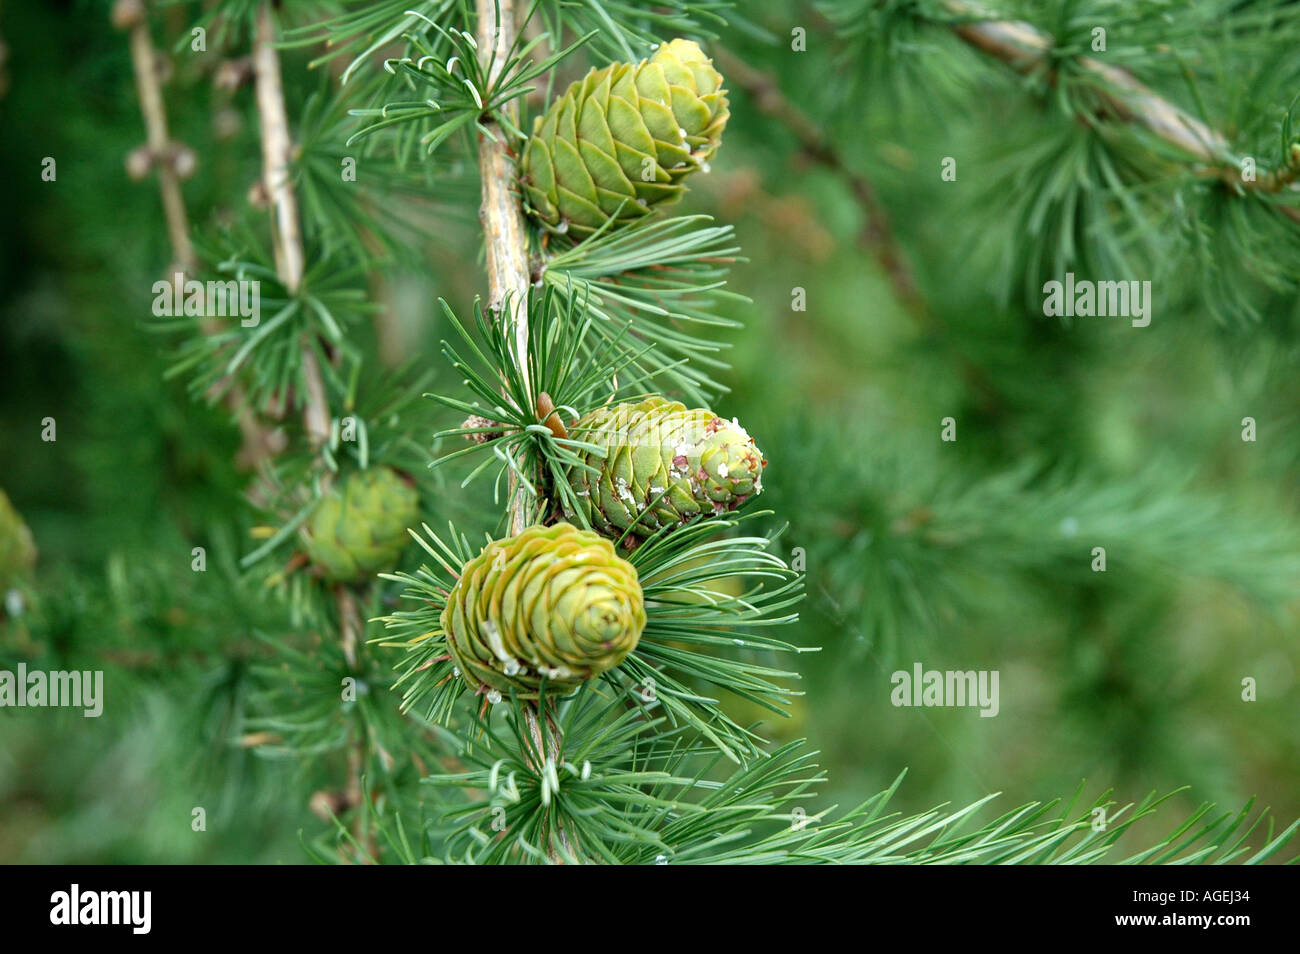 Young Fir Cones on evergreen genus abies fir tree England Stock Photo